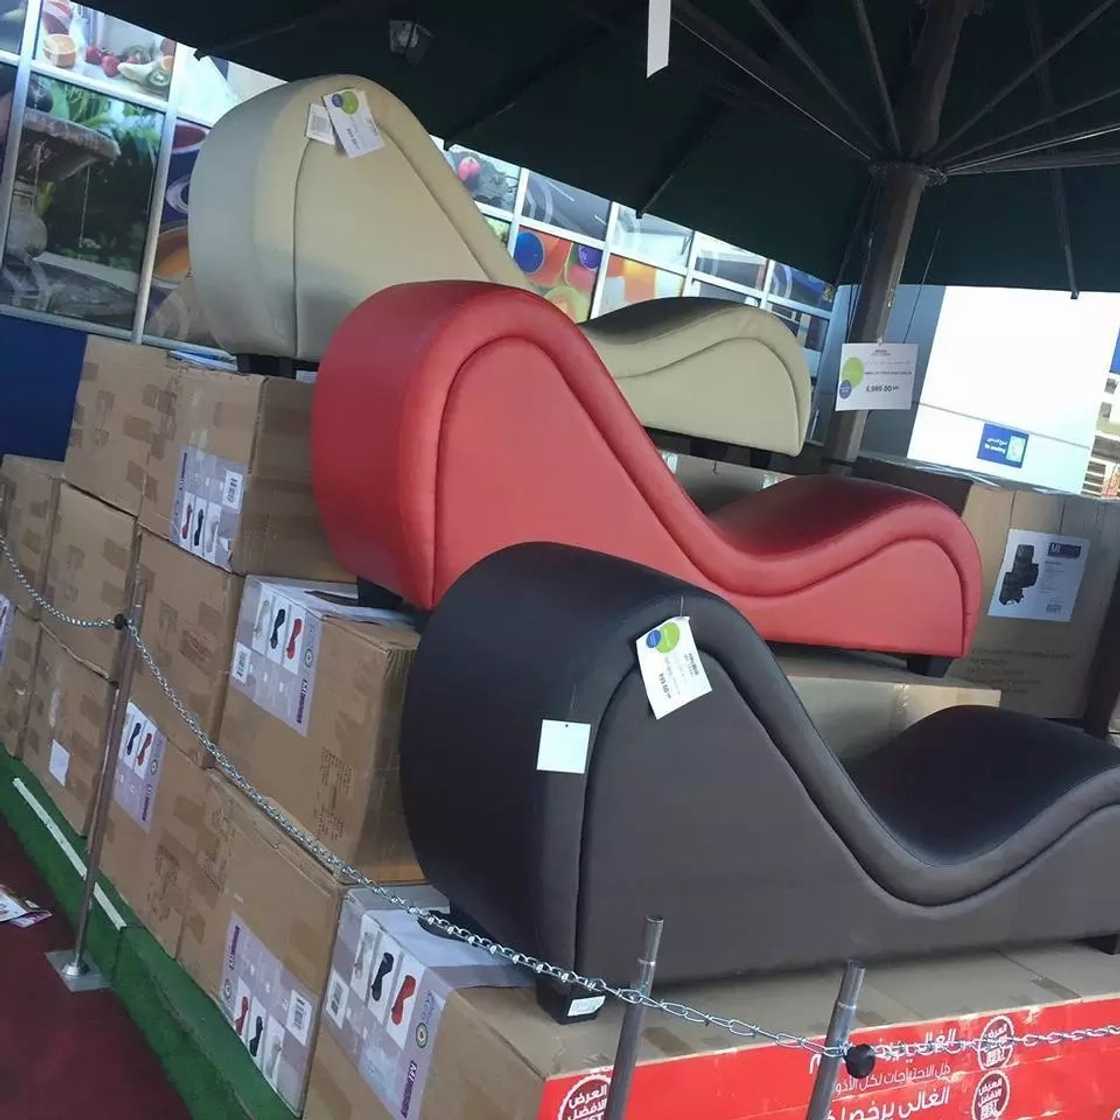 Sex sofas being sold in Kenya